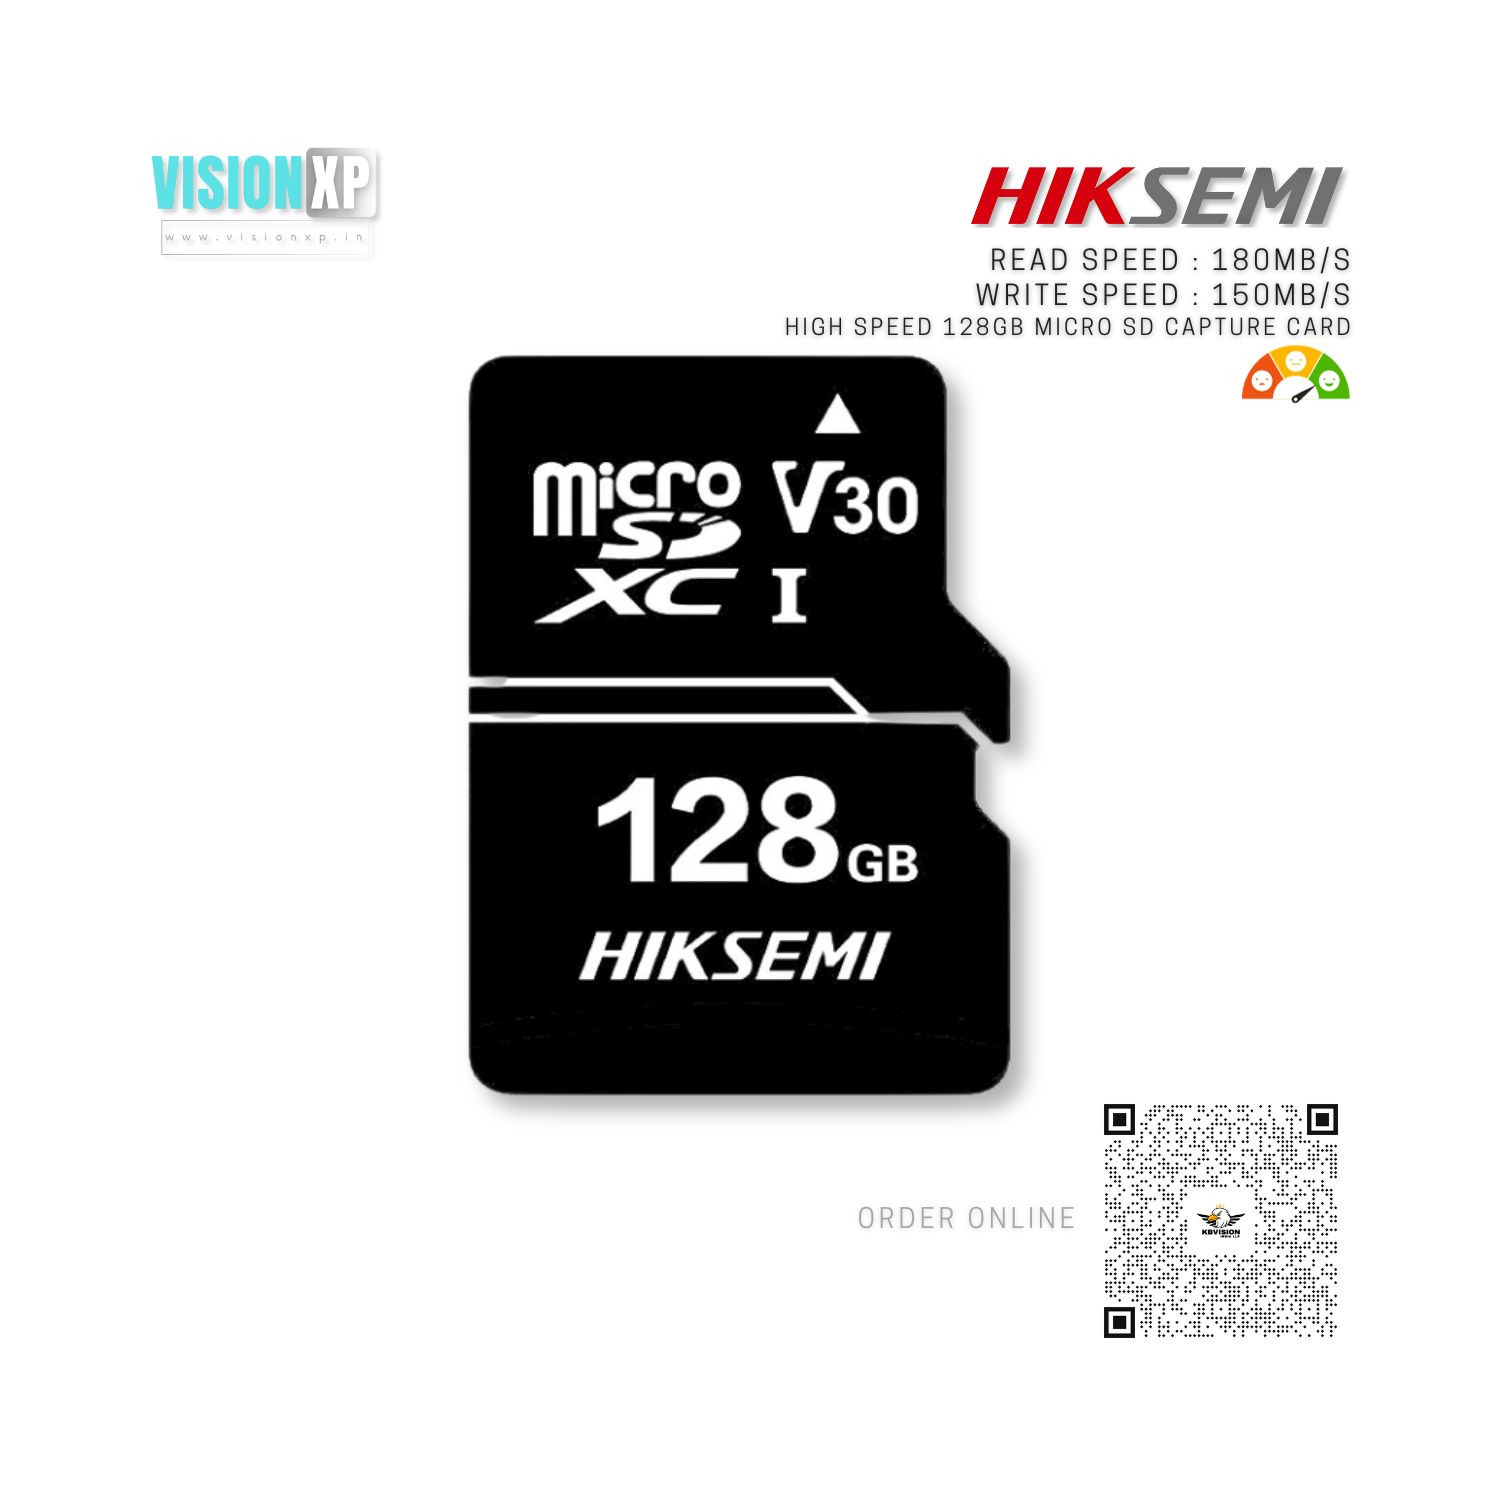 Hiksemi 128GB High Speed Capture Micro SD Card